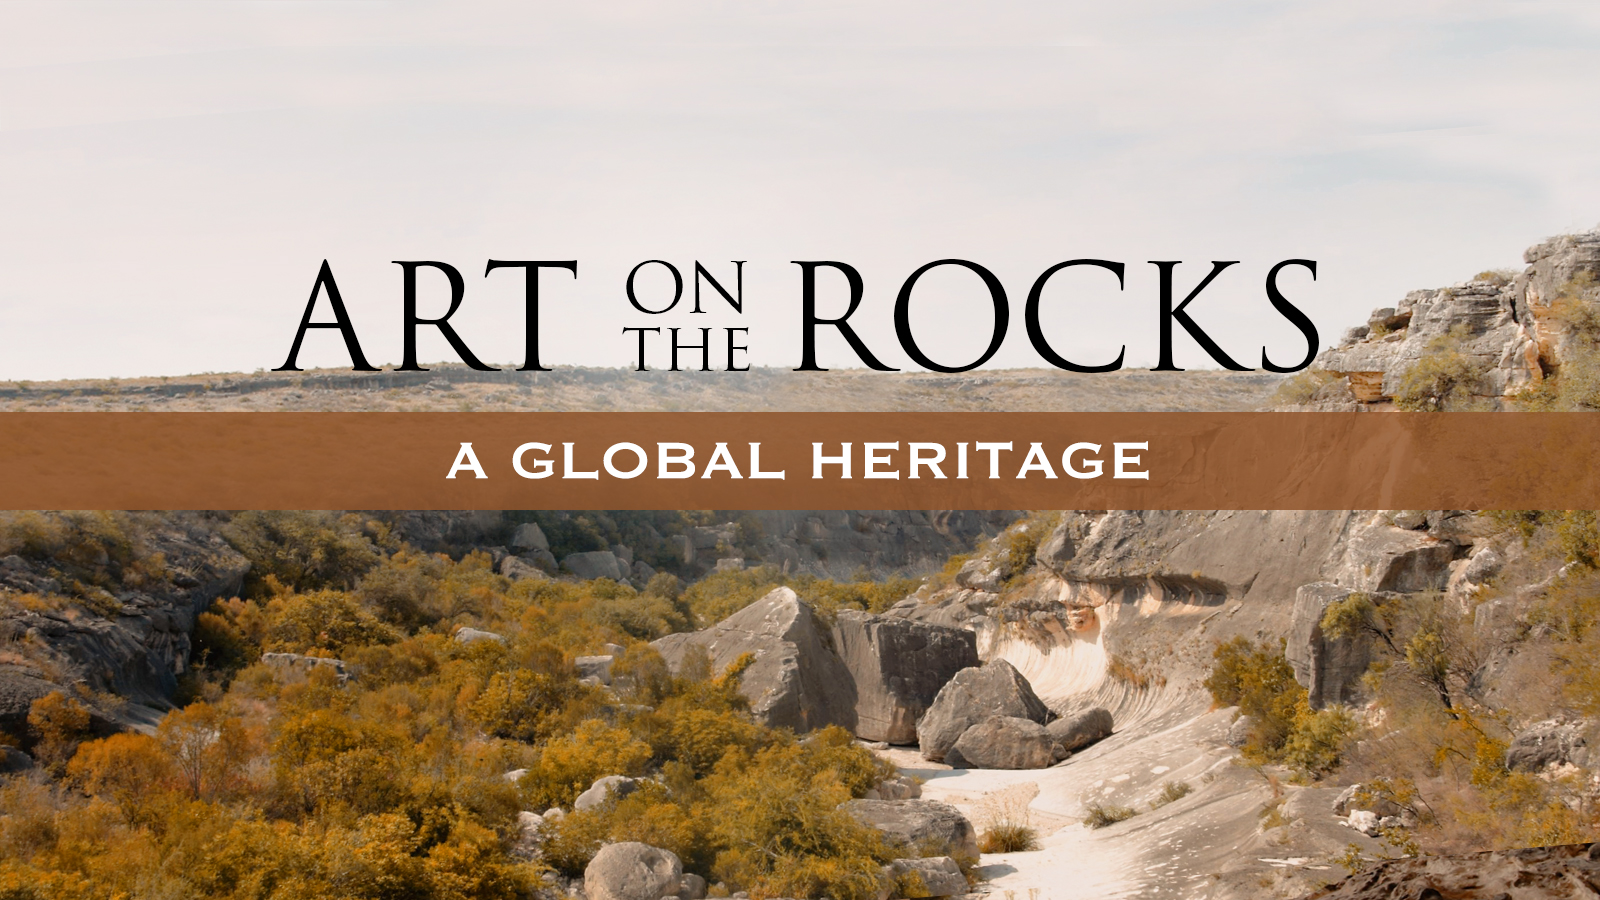 The Rock Art Network